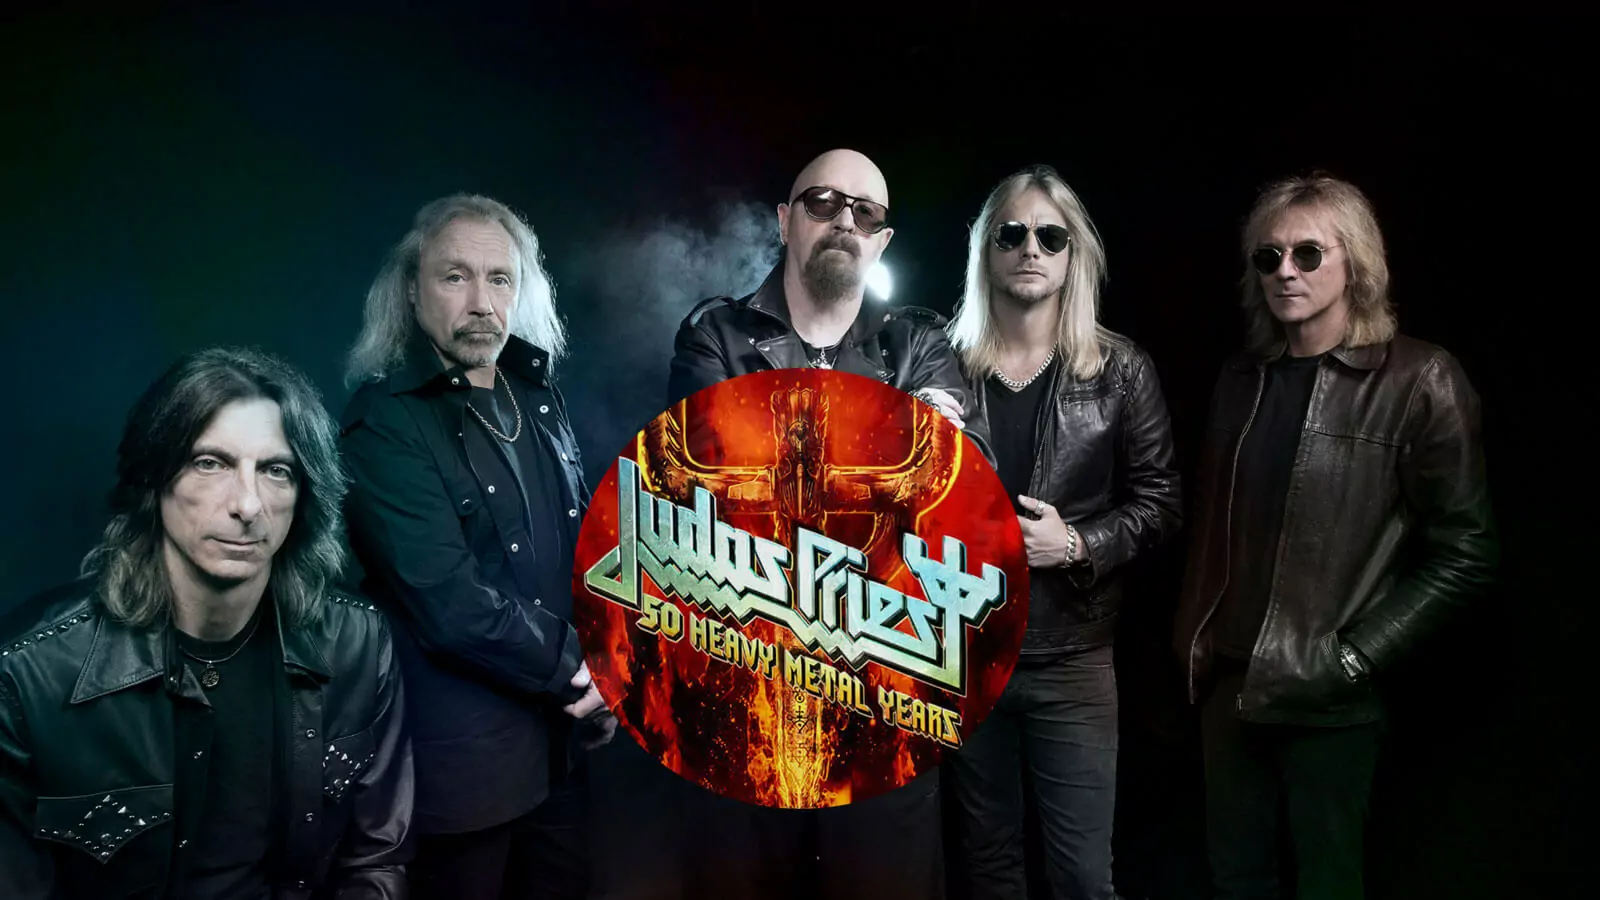 Judas Priest kick off 50 heavy metal years 2022 tour: setlist and performance